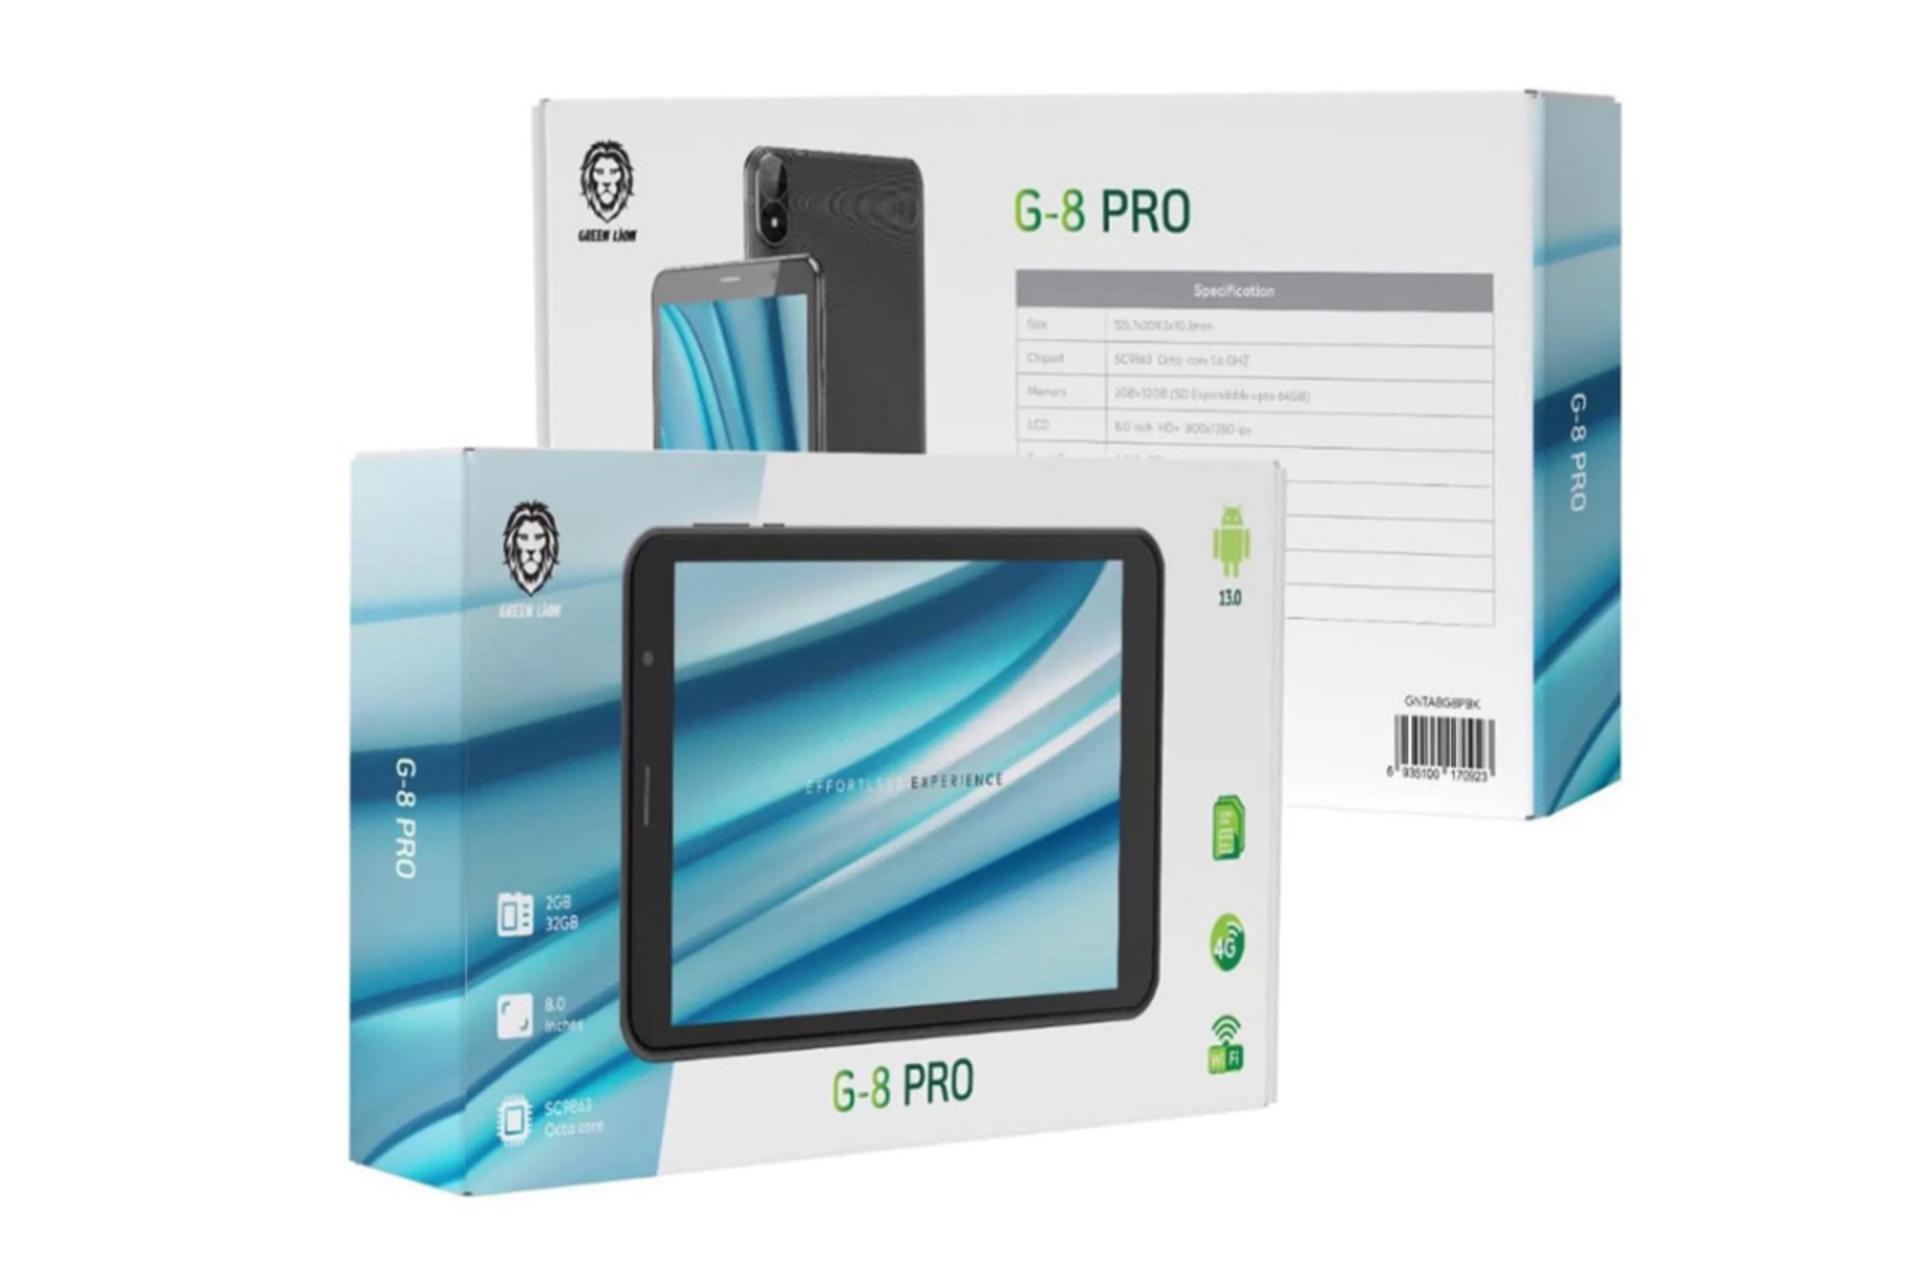 جعبه تبلت گرین لیون G-8 پرو / Green Lion G-8 Pro